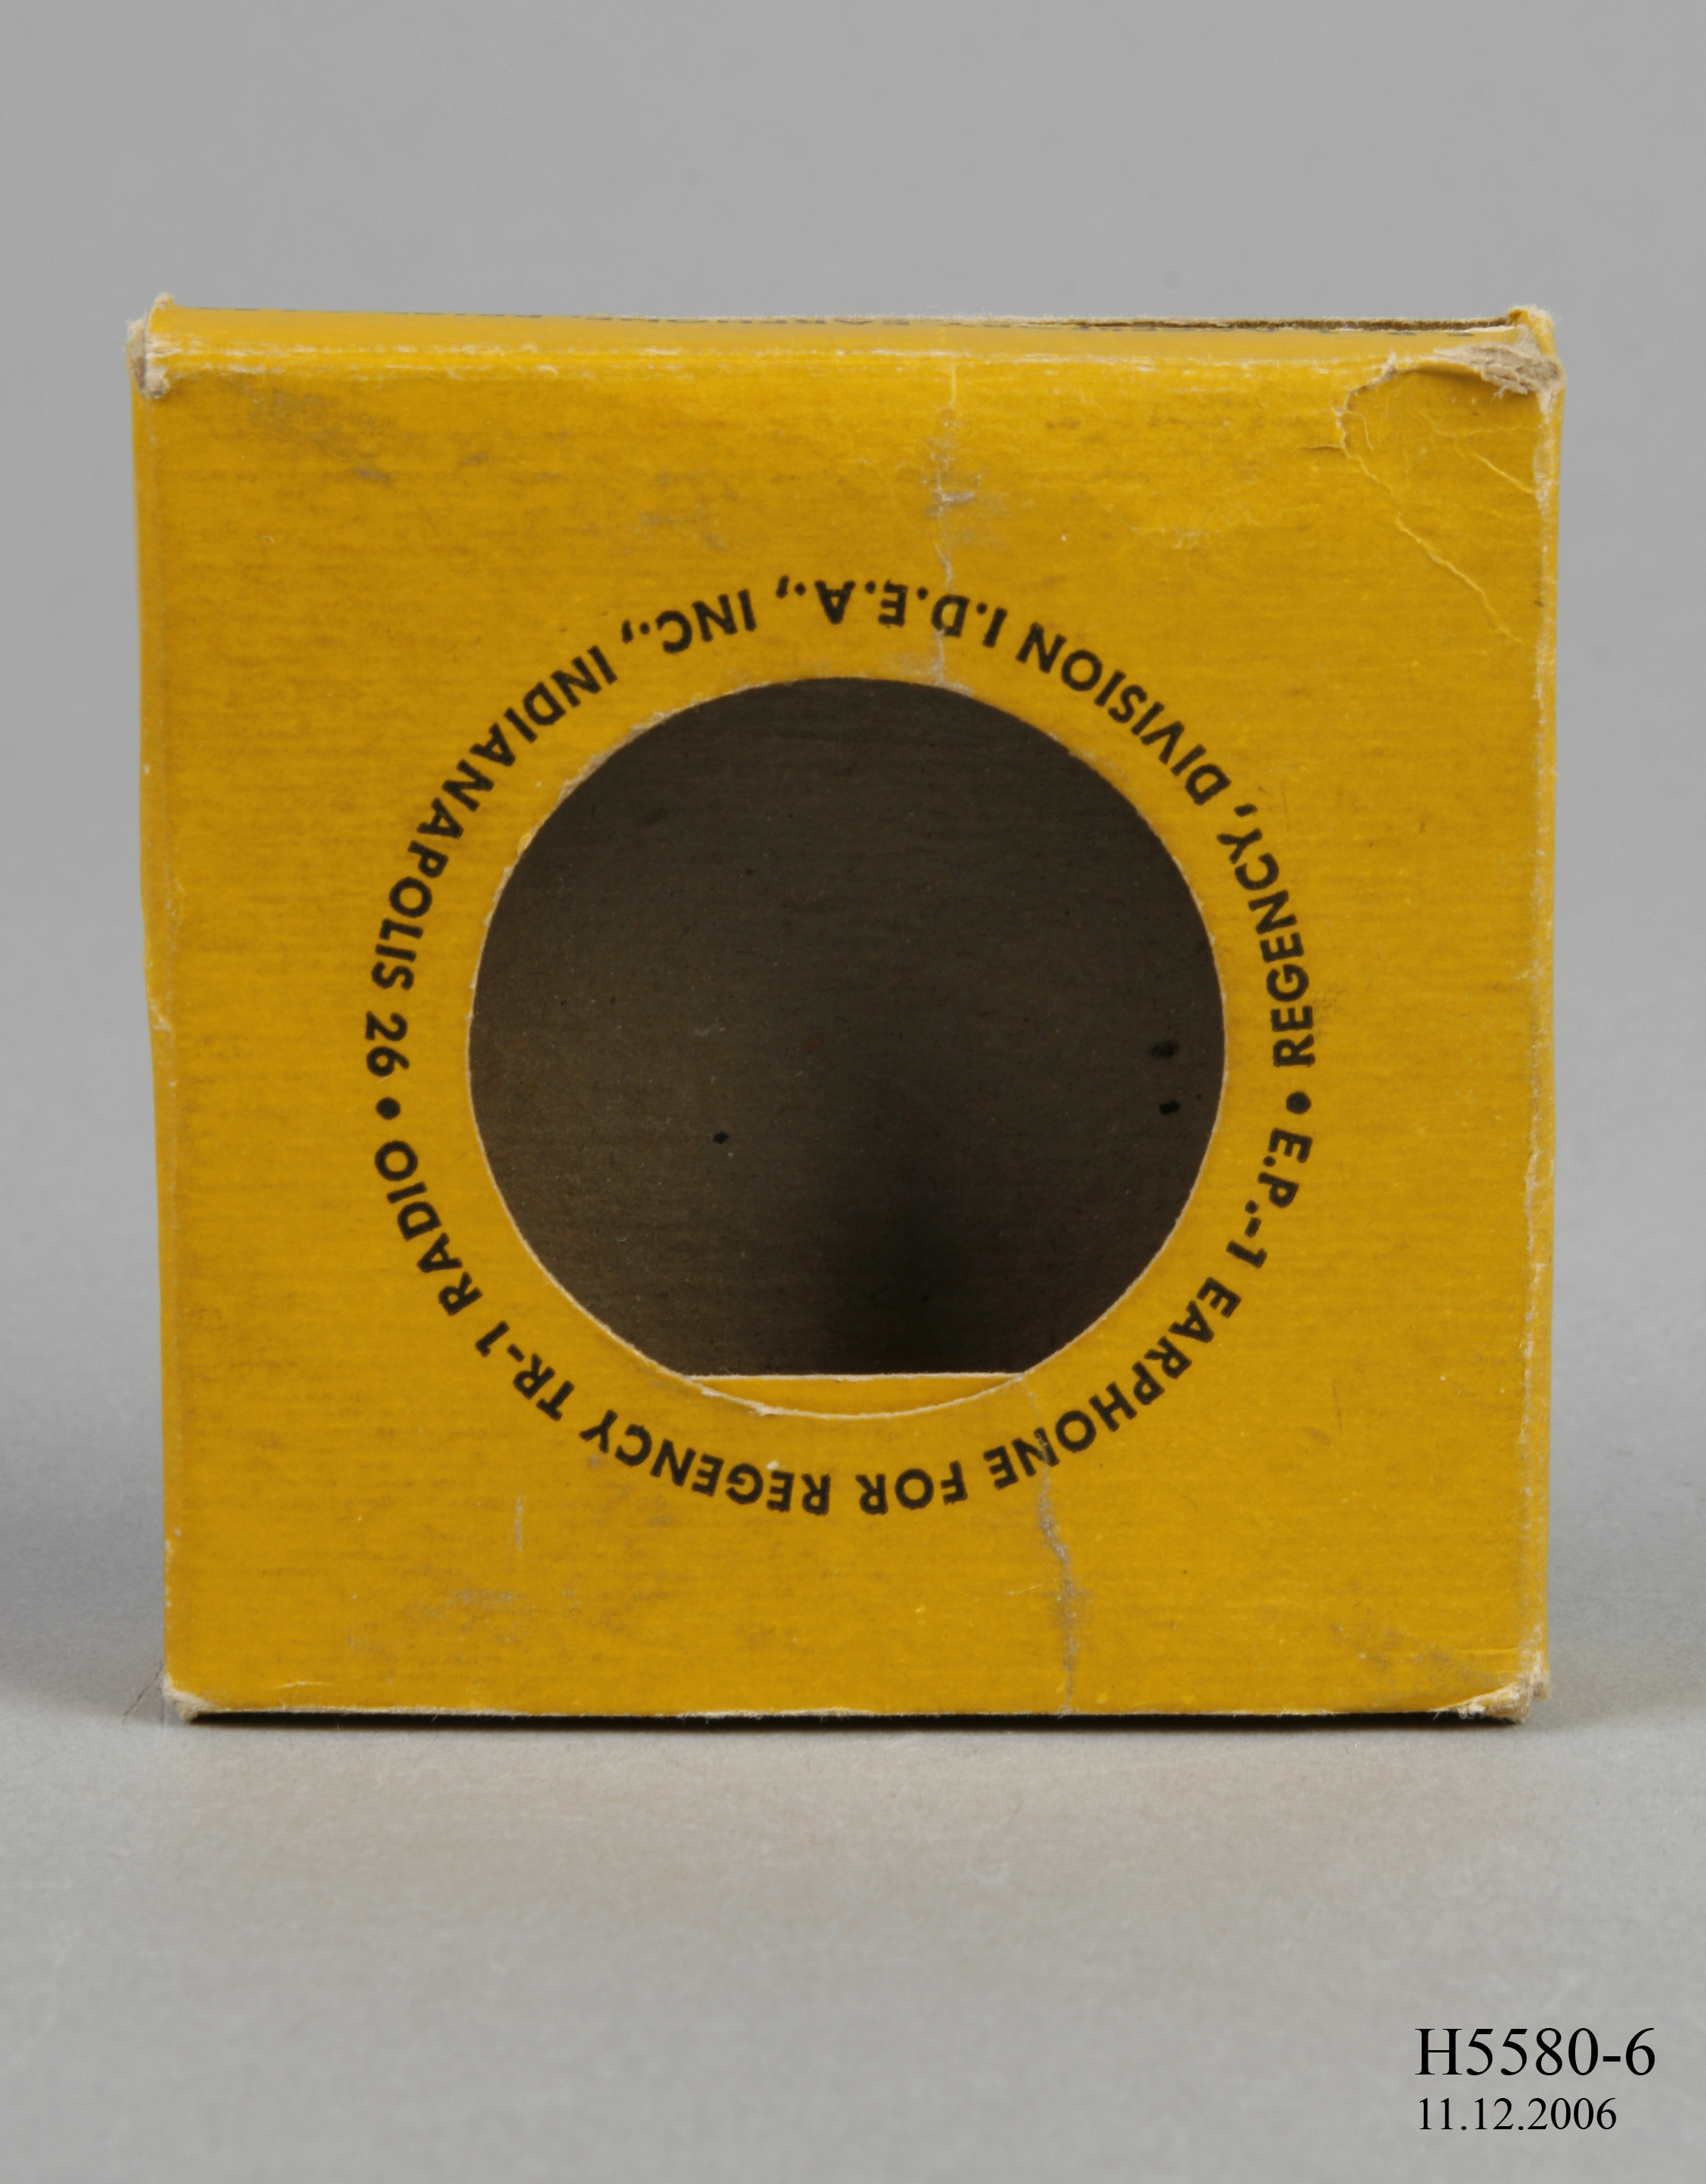 A cardboard yellow box for a Regency transistor radio earphones